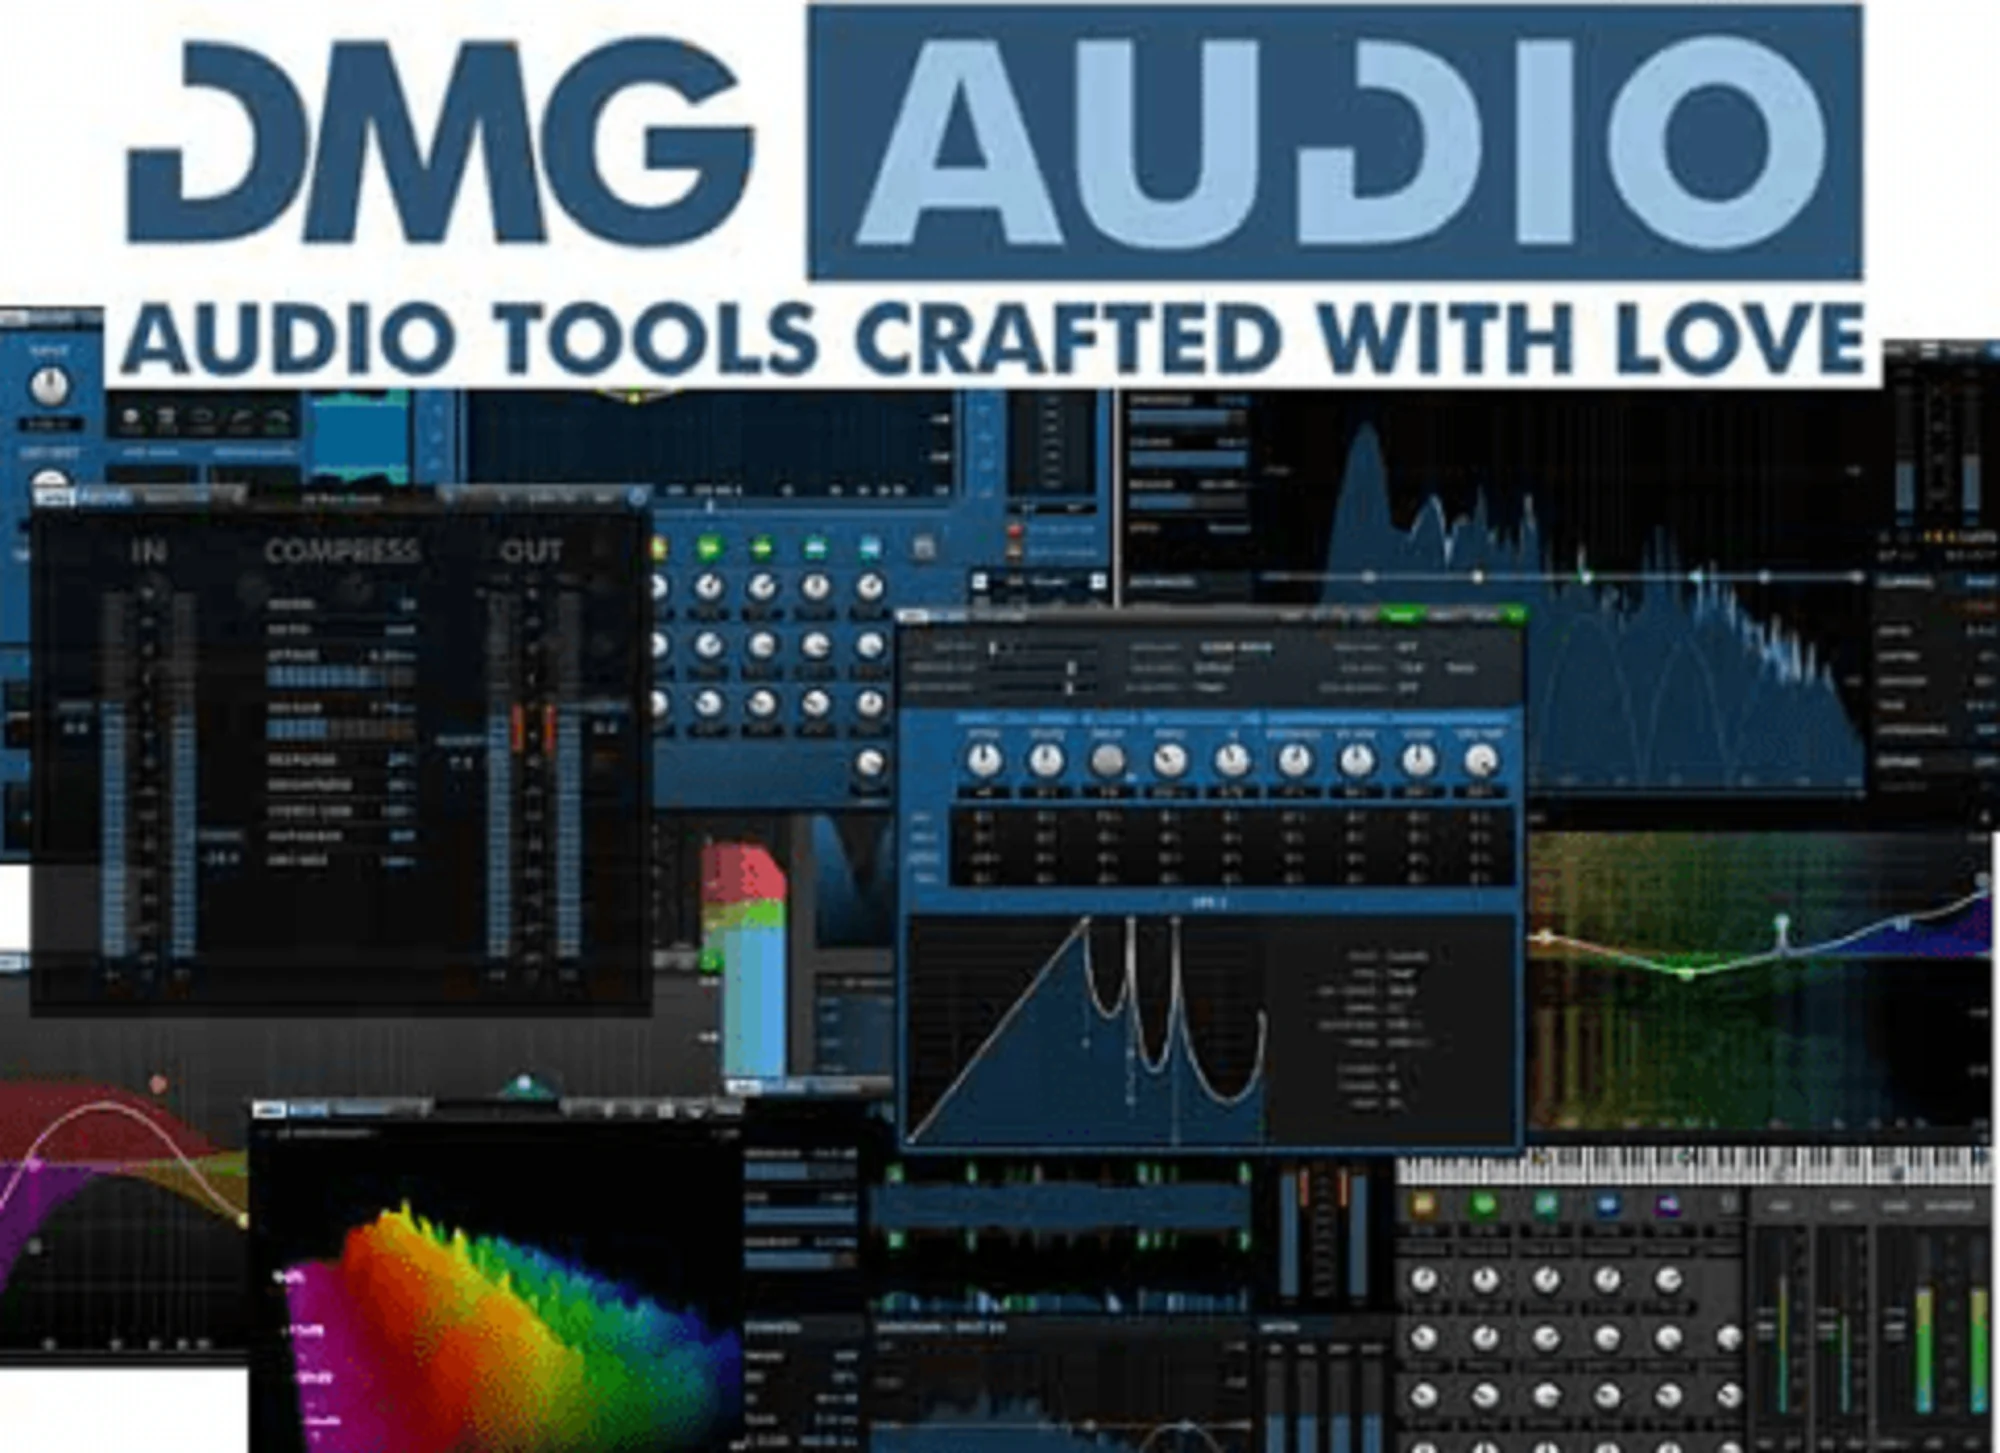 

DMG Audio All Plugins Bundle 2021 full version standalone offline installer for Windows